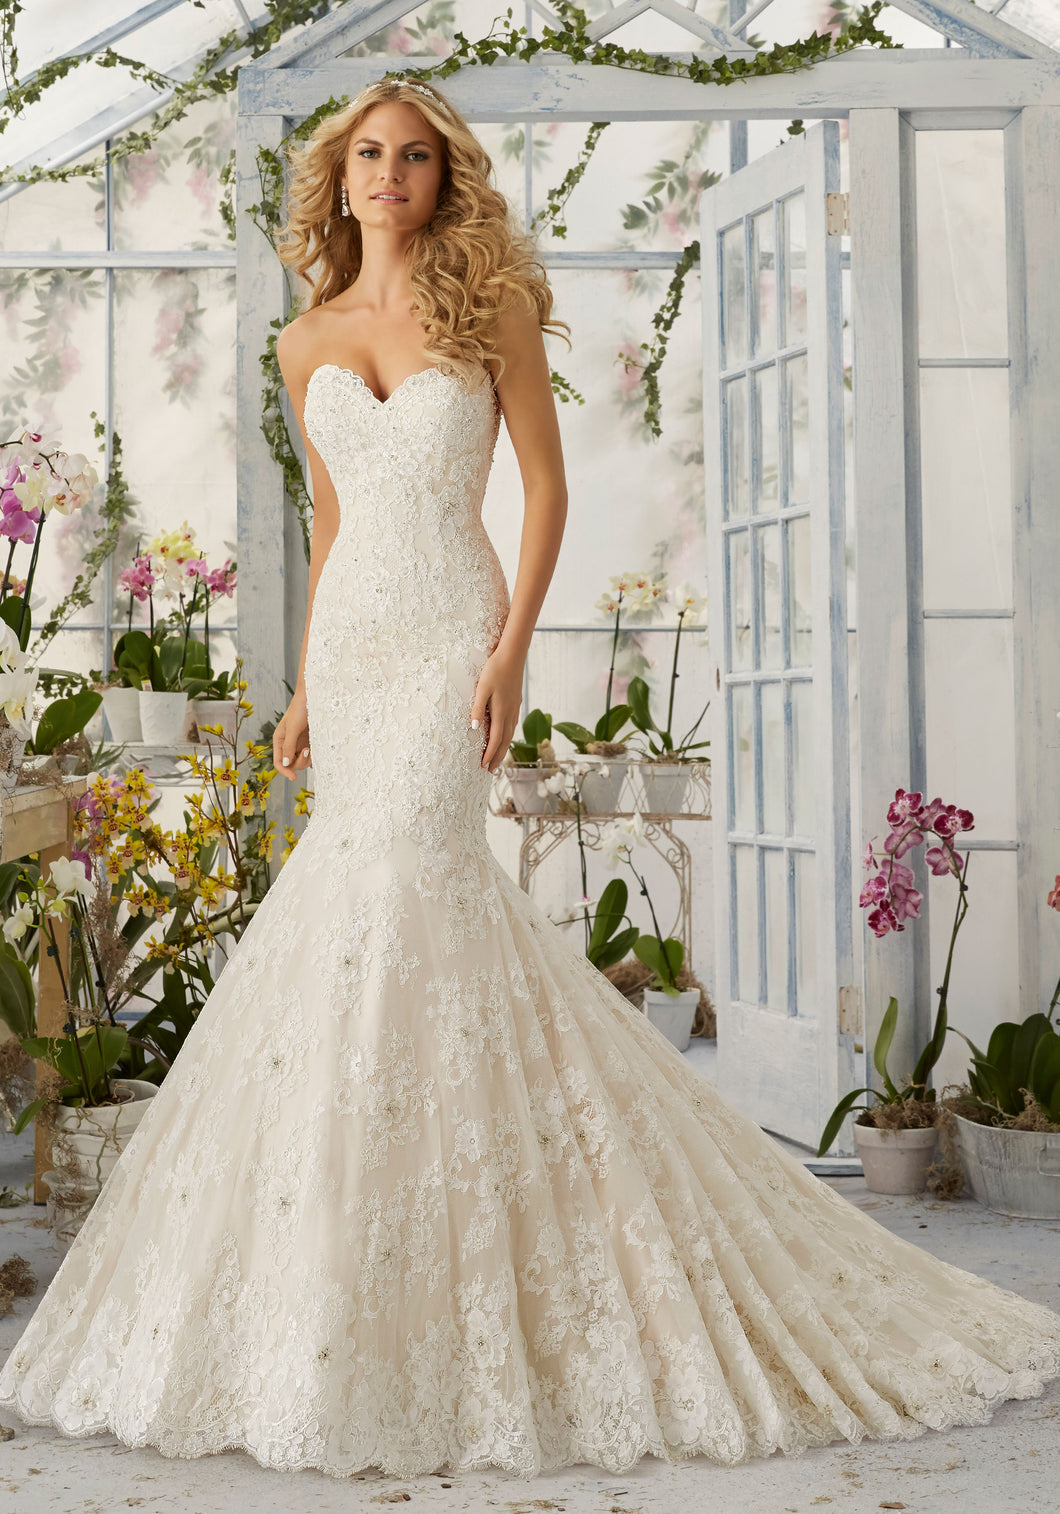 Mori Lee 'Madeline Gardner 2820' size 8 new wedding dress front view on model